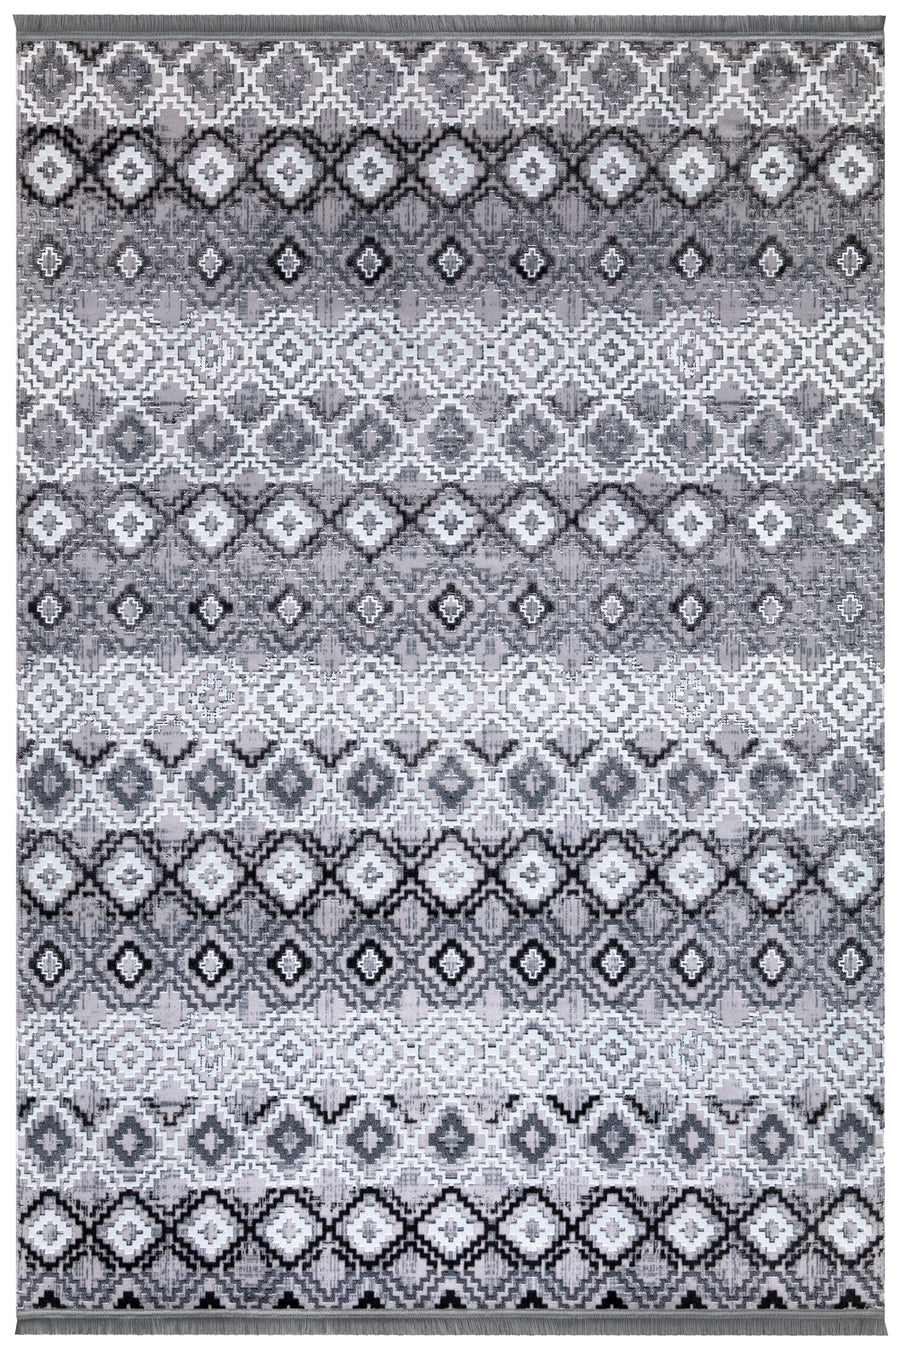 Decoroplus, Decoro+, high quality turkish area rug for dining or living room, soft rug, modern rug, dining rug, living room rug